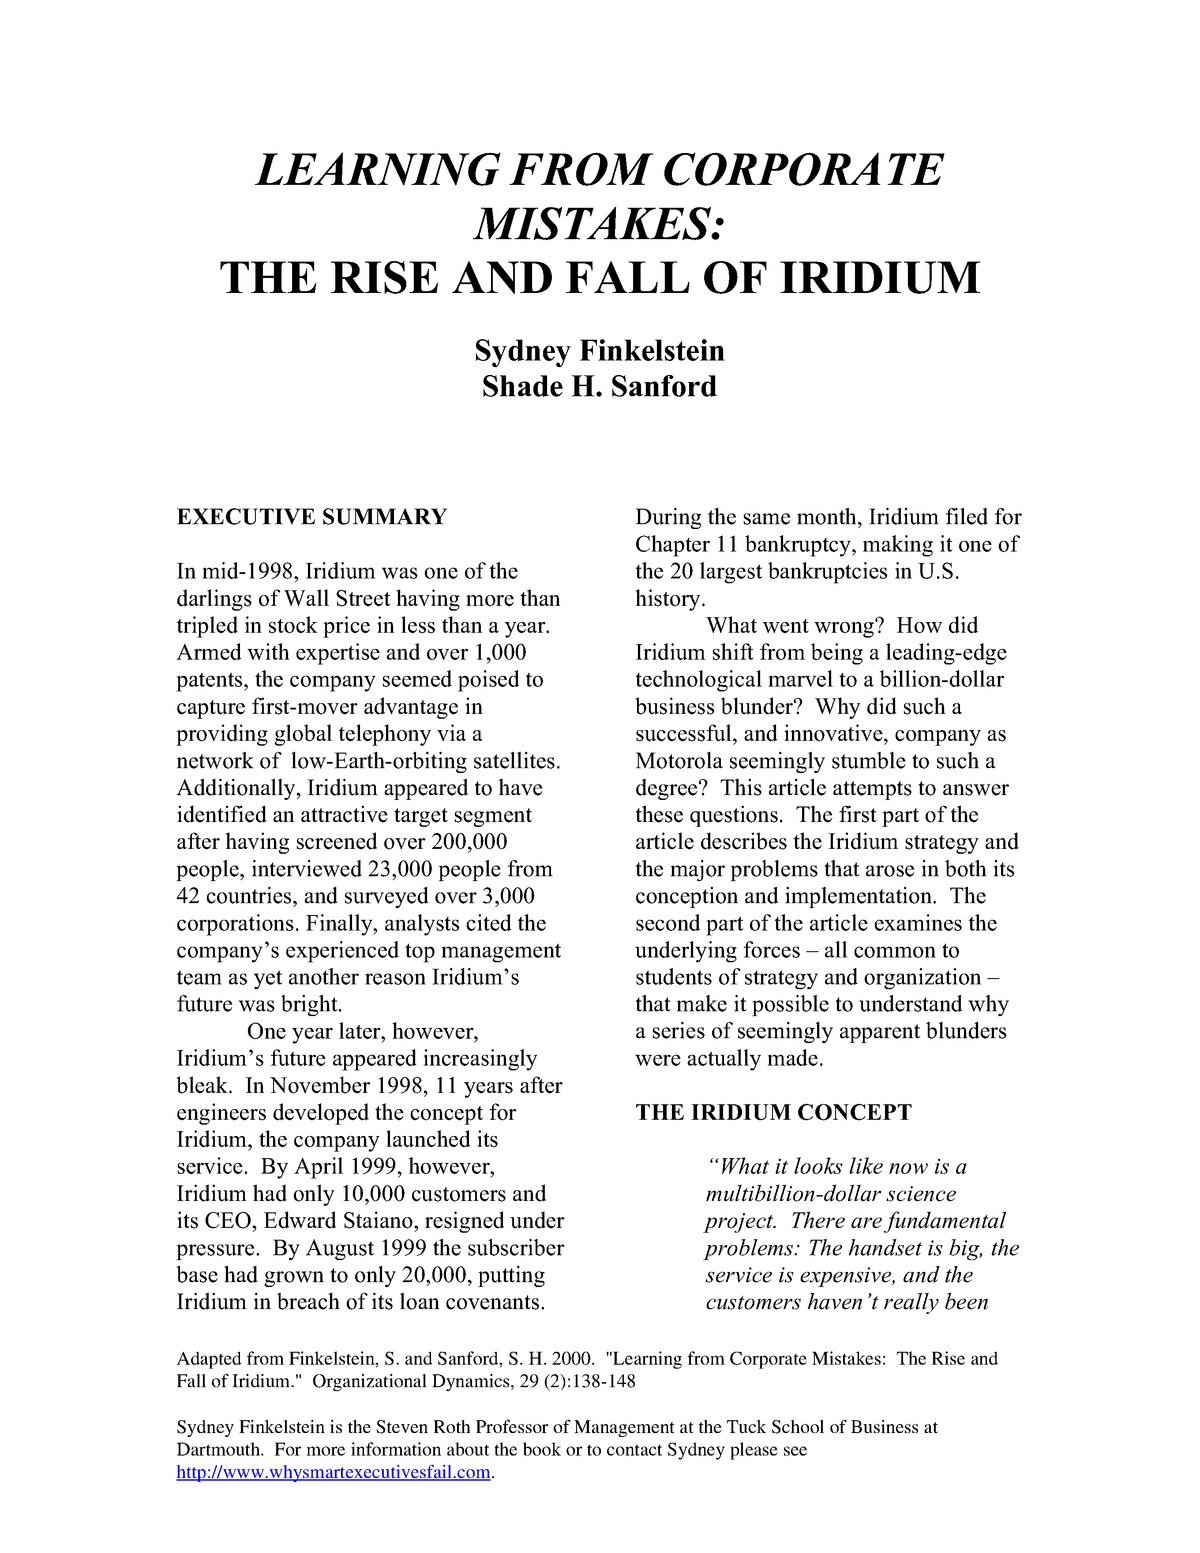 iridium case study solution